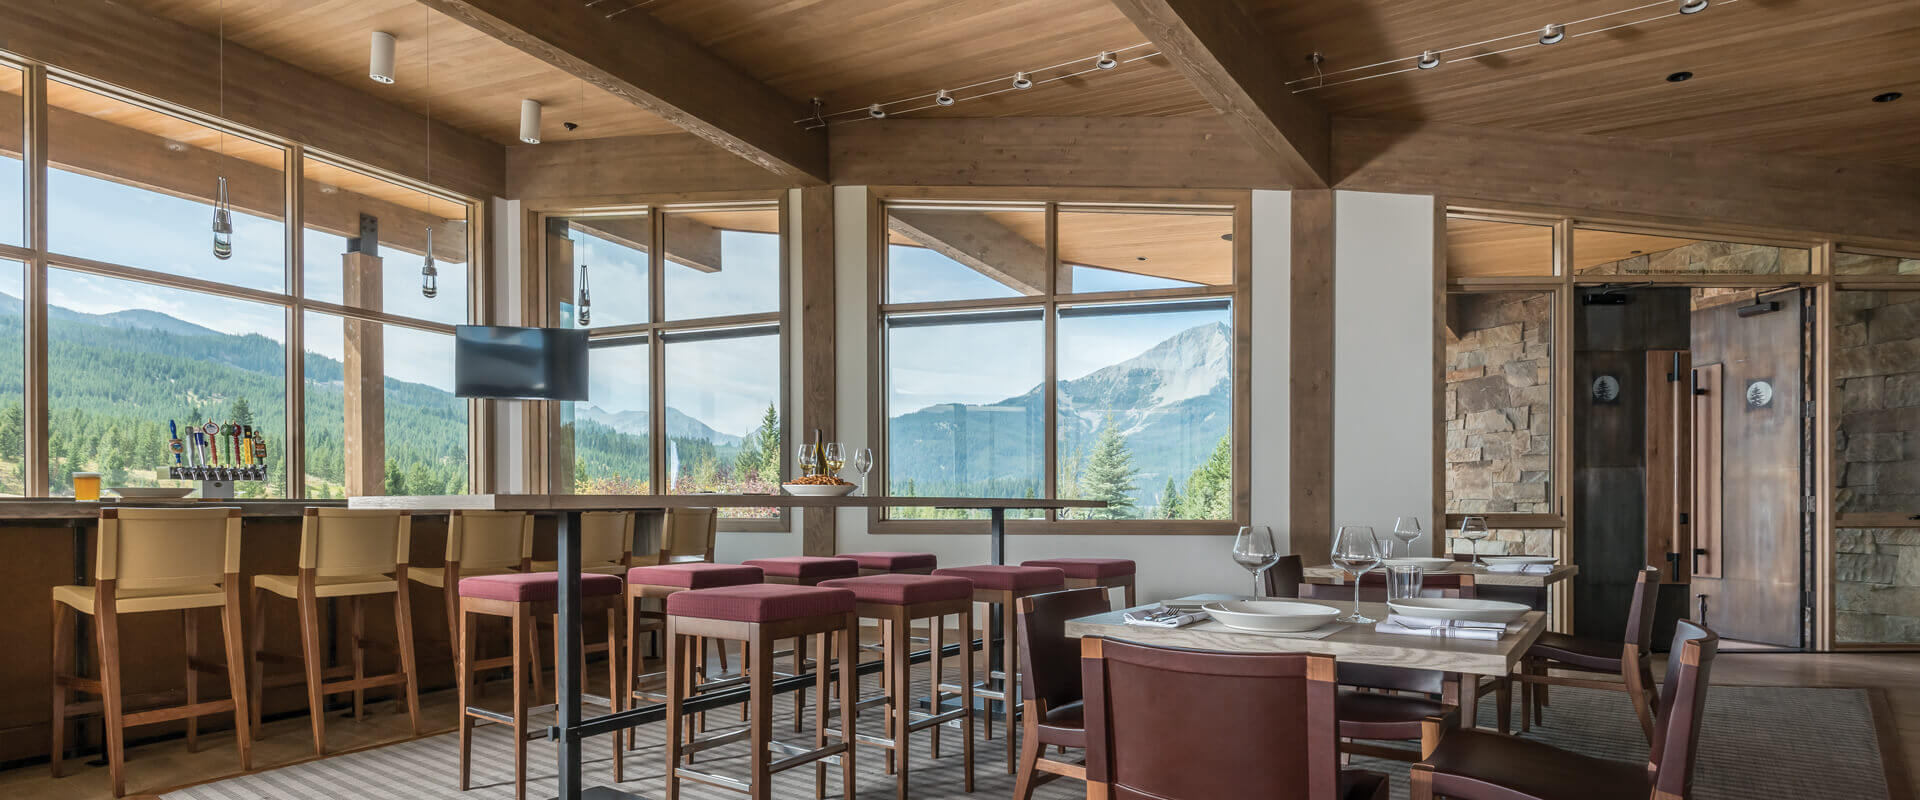 VistaLuxe Direct Set & Geometric Trapezoid Windows Restaurant Interior Mountain View